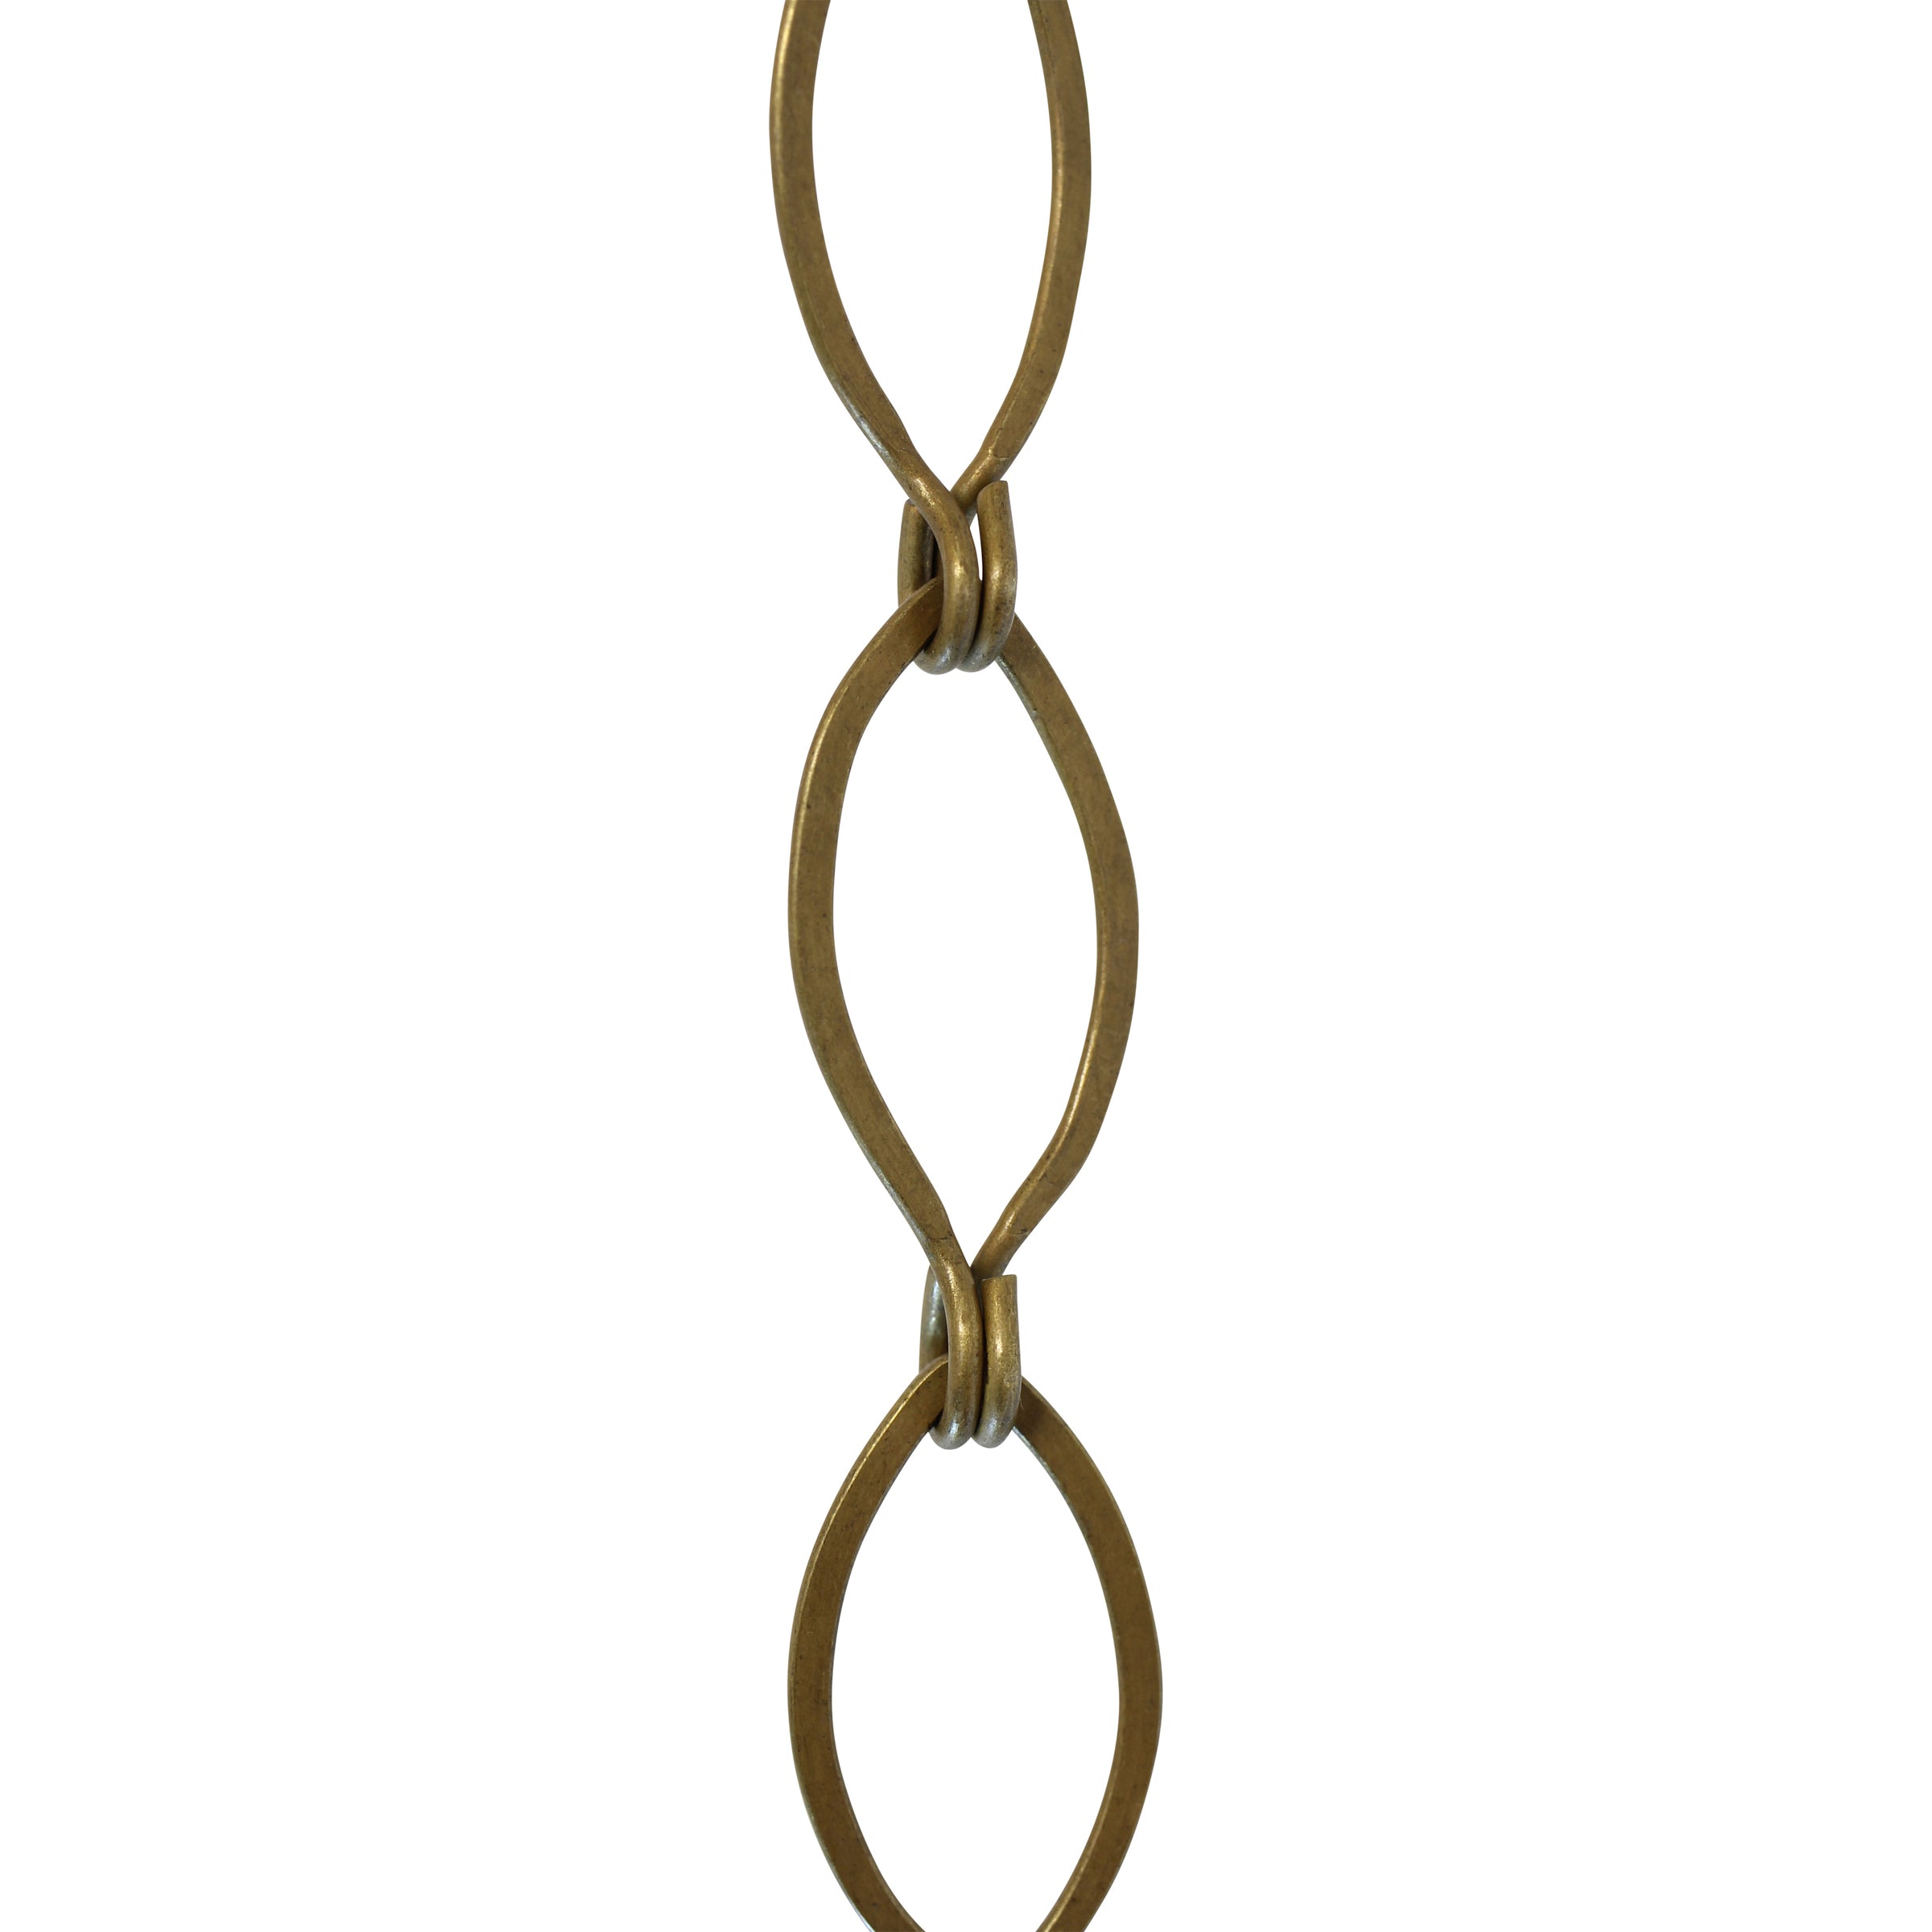 RCH Supply Company CH-S60-02-CG-65 Decorative Chain or Chain Break (65 Feet) Color: Champagne Gold